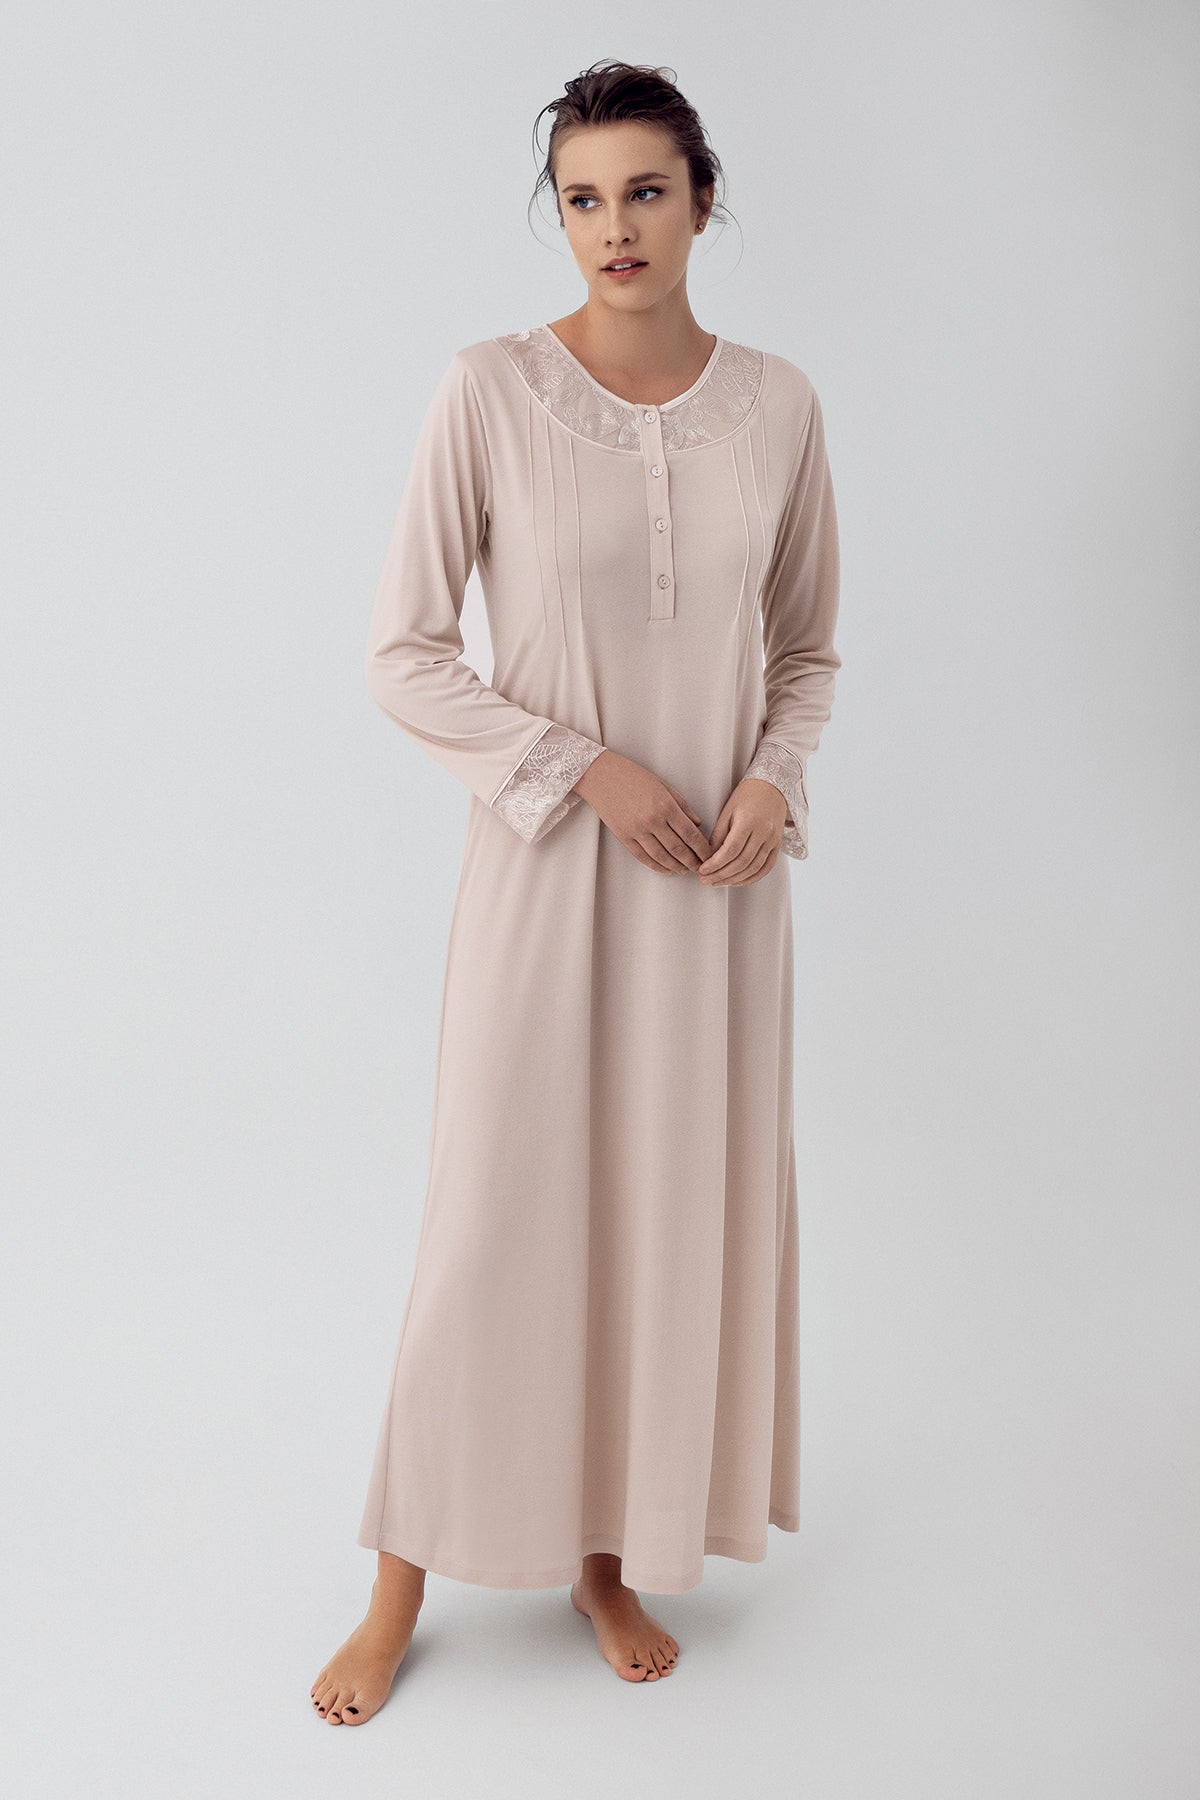 Lace Sleeve Long Maternity & Nursing Nightgown Beige - 16104